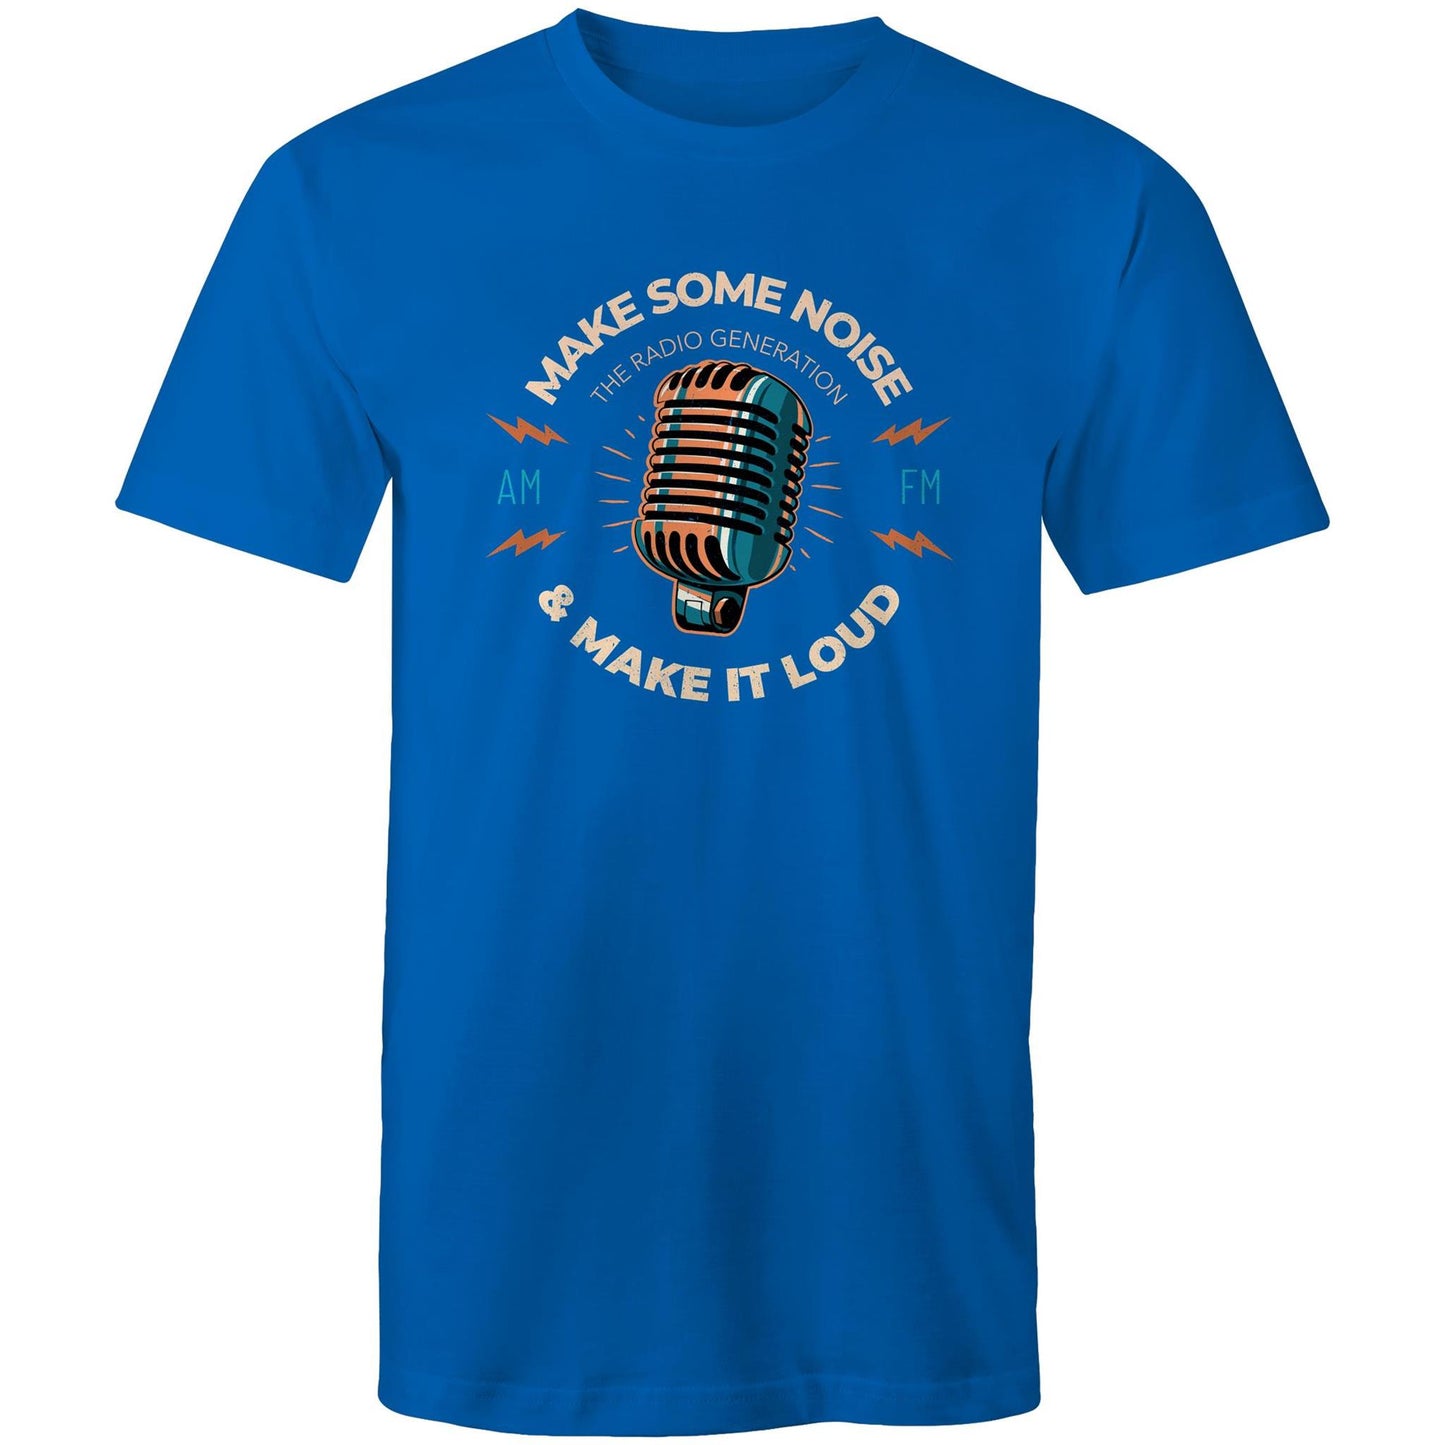 Make Some Noise And Make It Loud - Mens T-Shirt Bright Royal Mens T-shirt Music